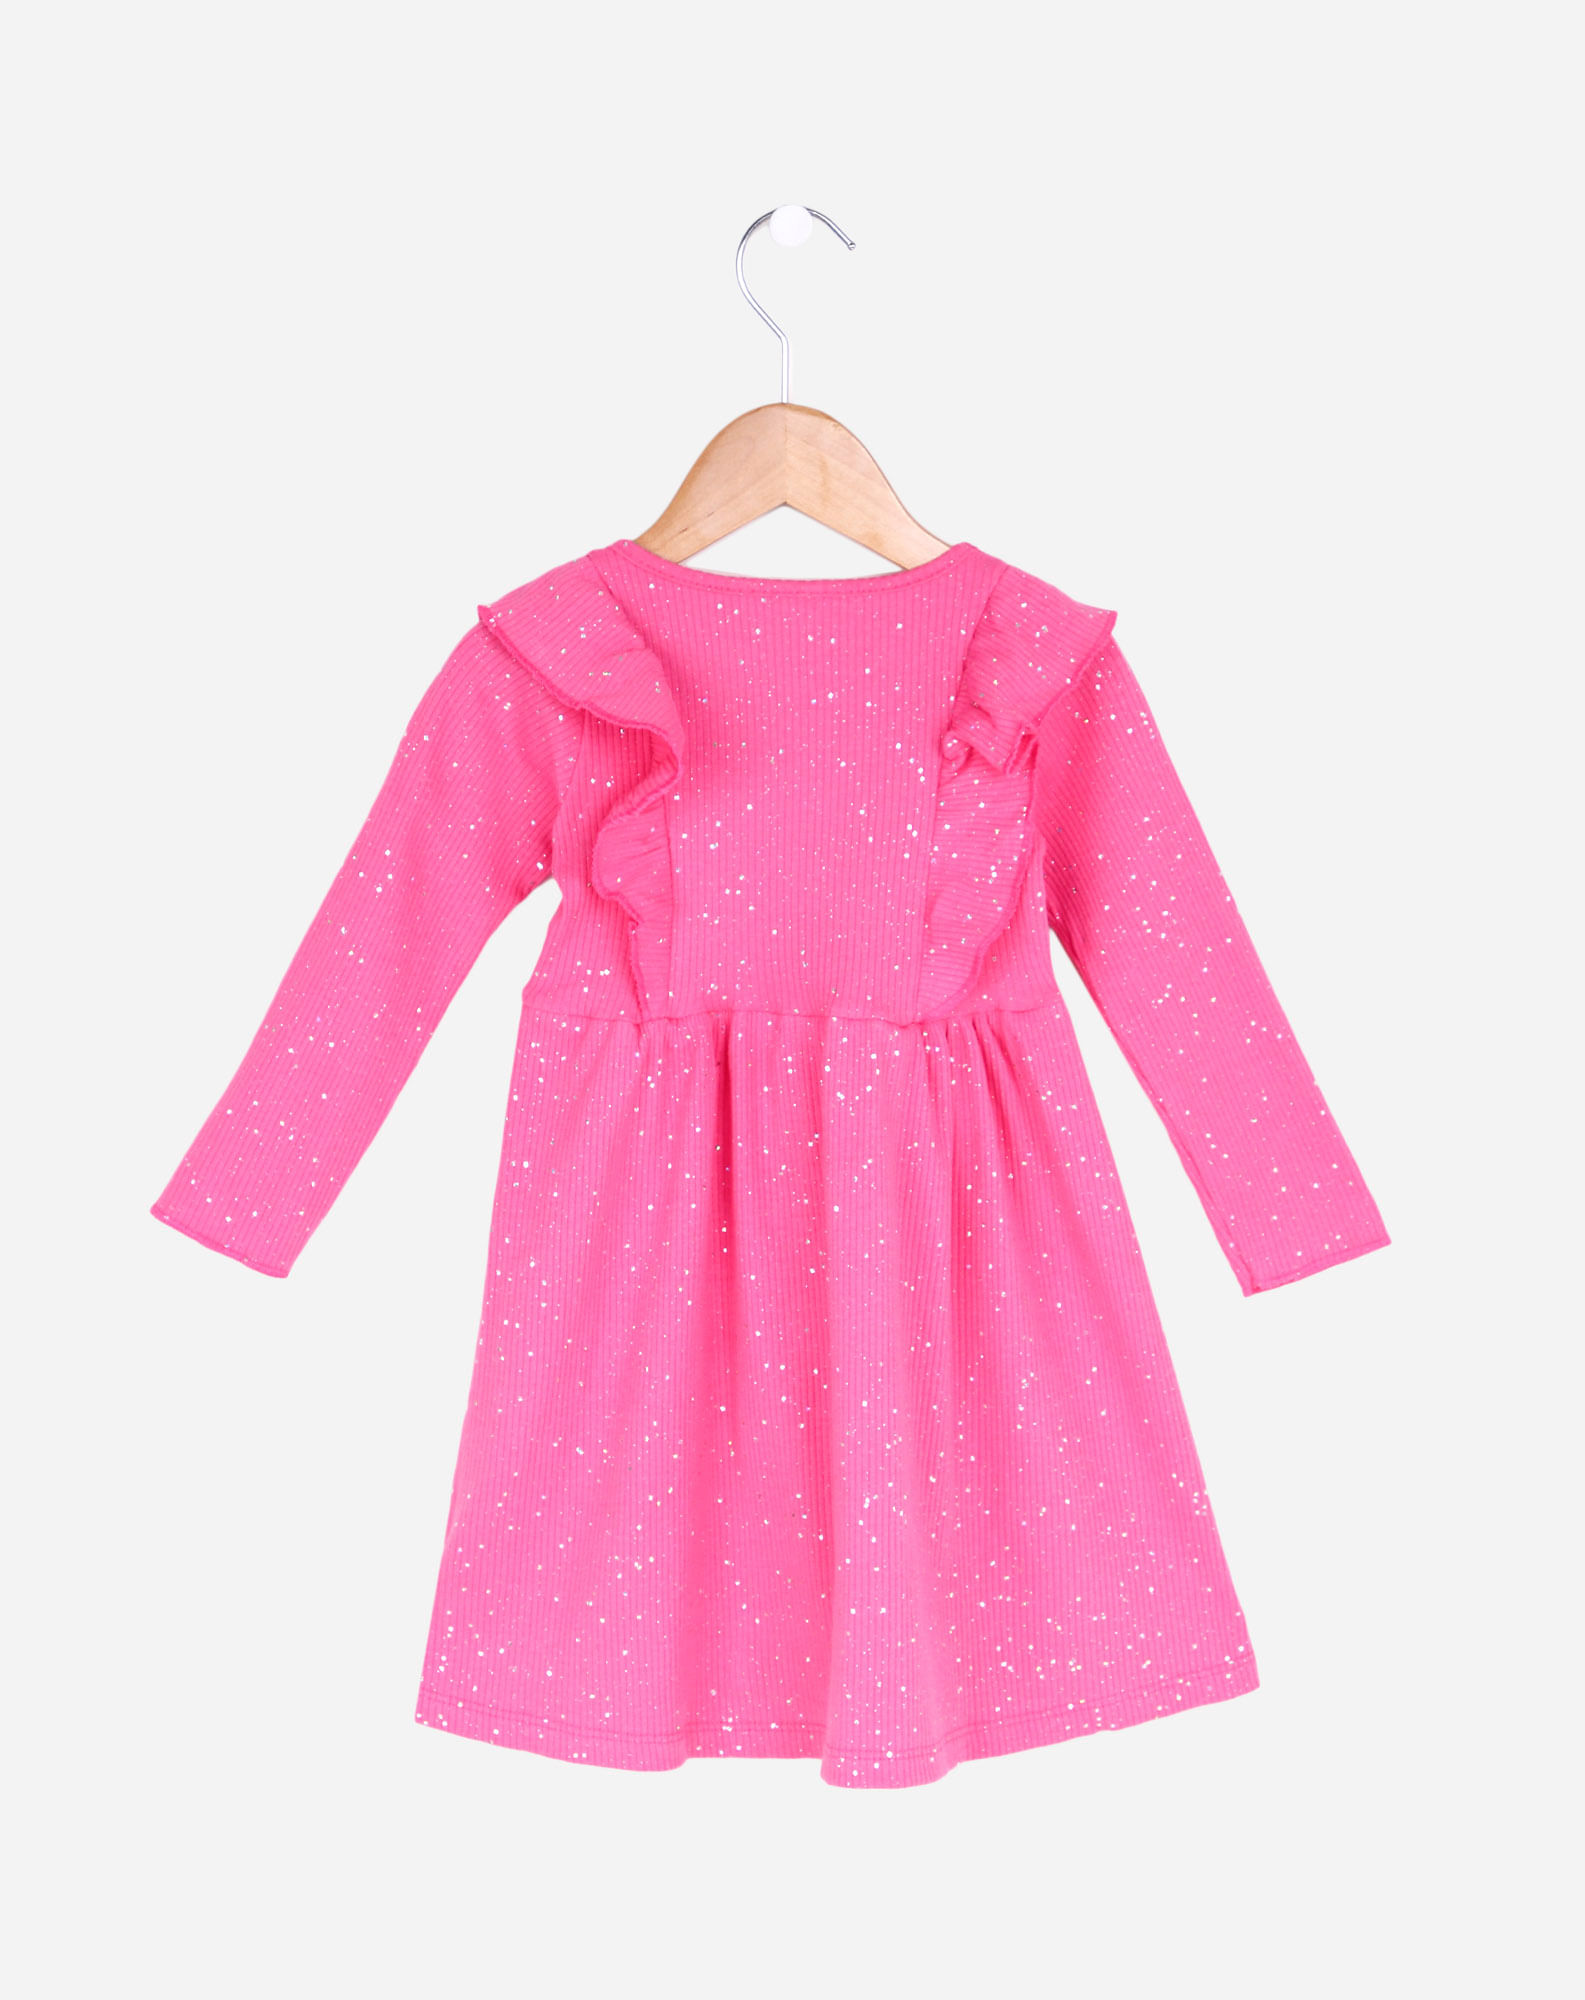 700534001 vestido manga longa infantil menina babados - tam. 1 à 3 anos pink 1 84c